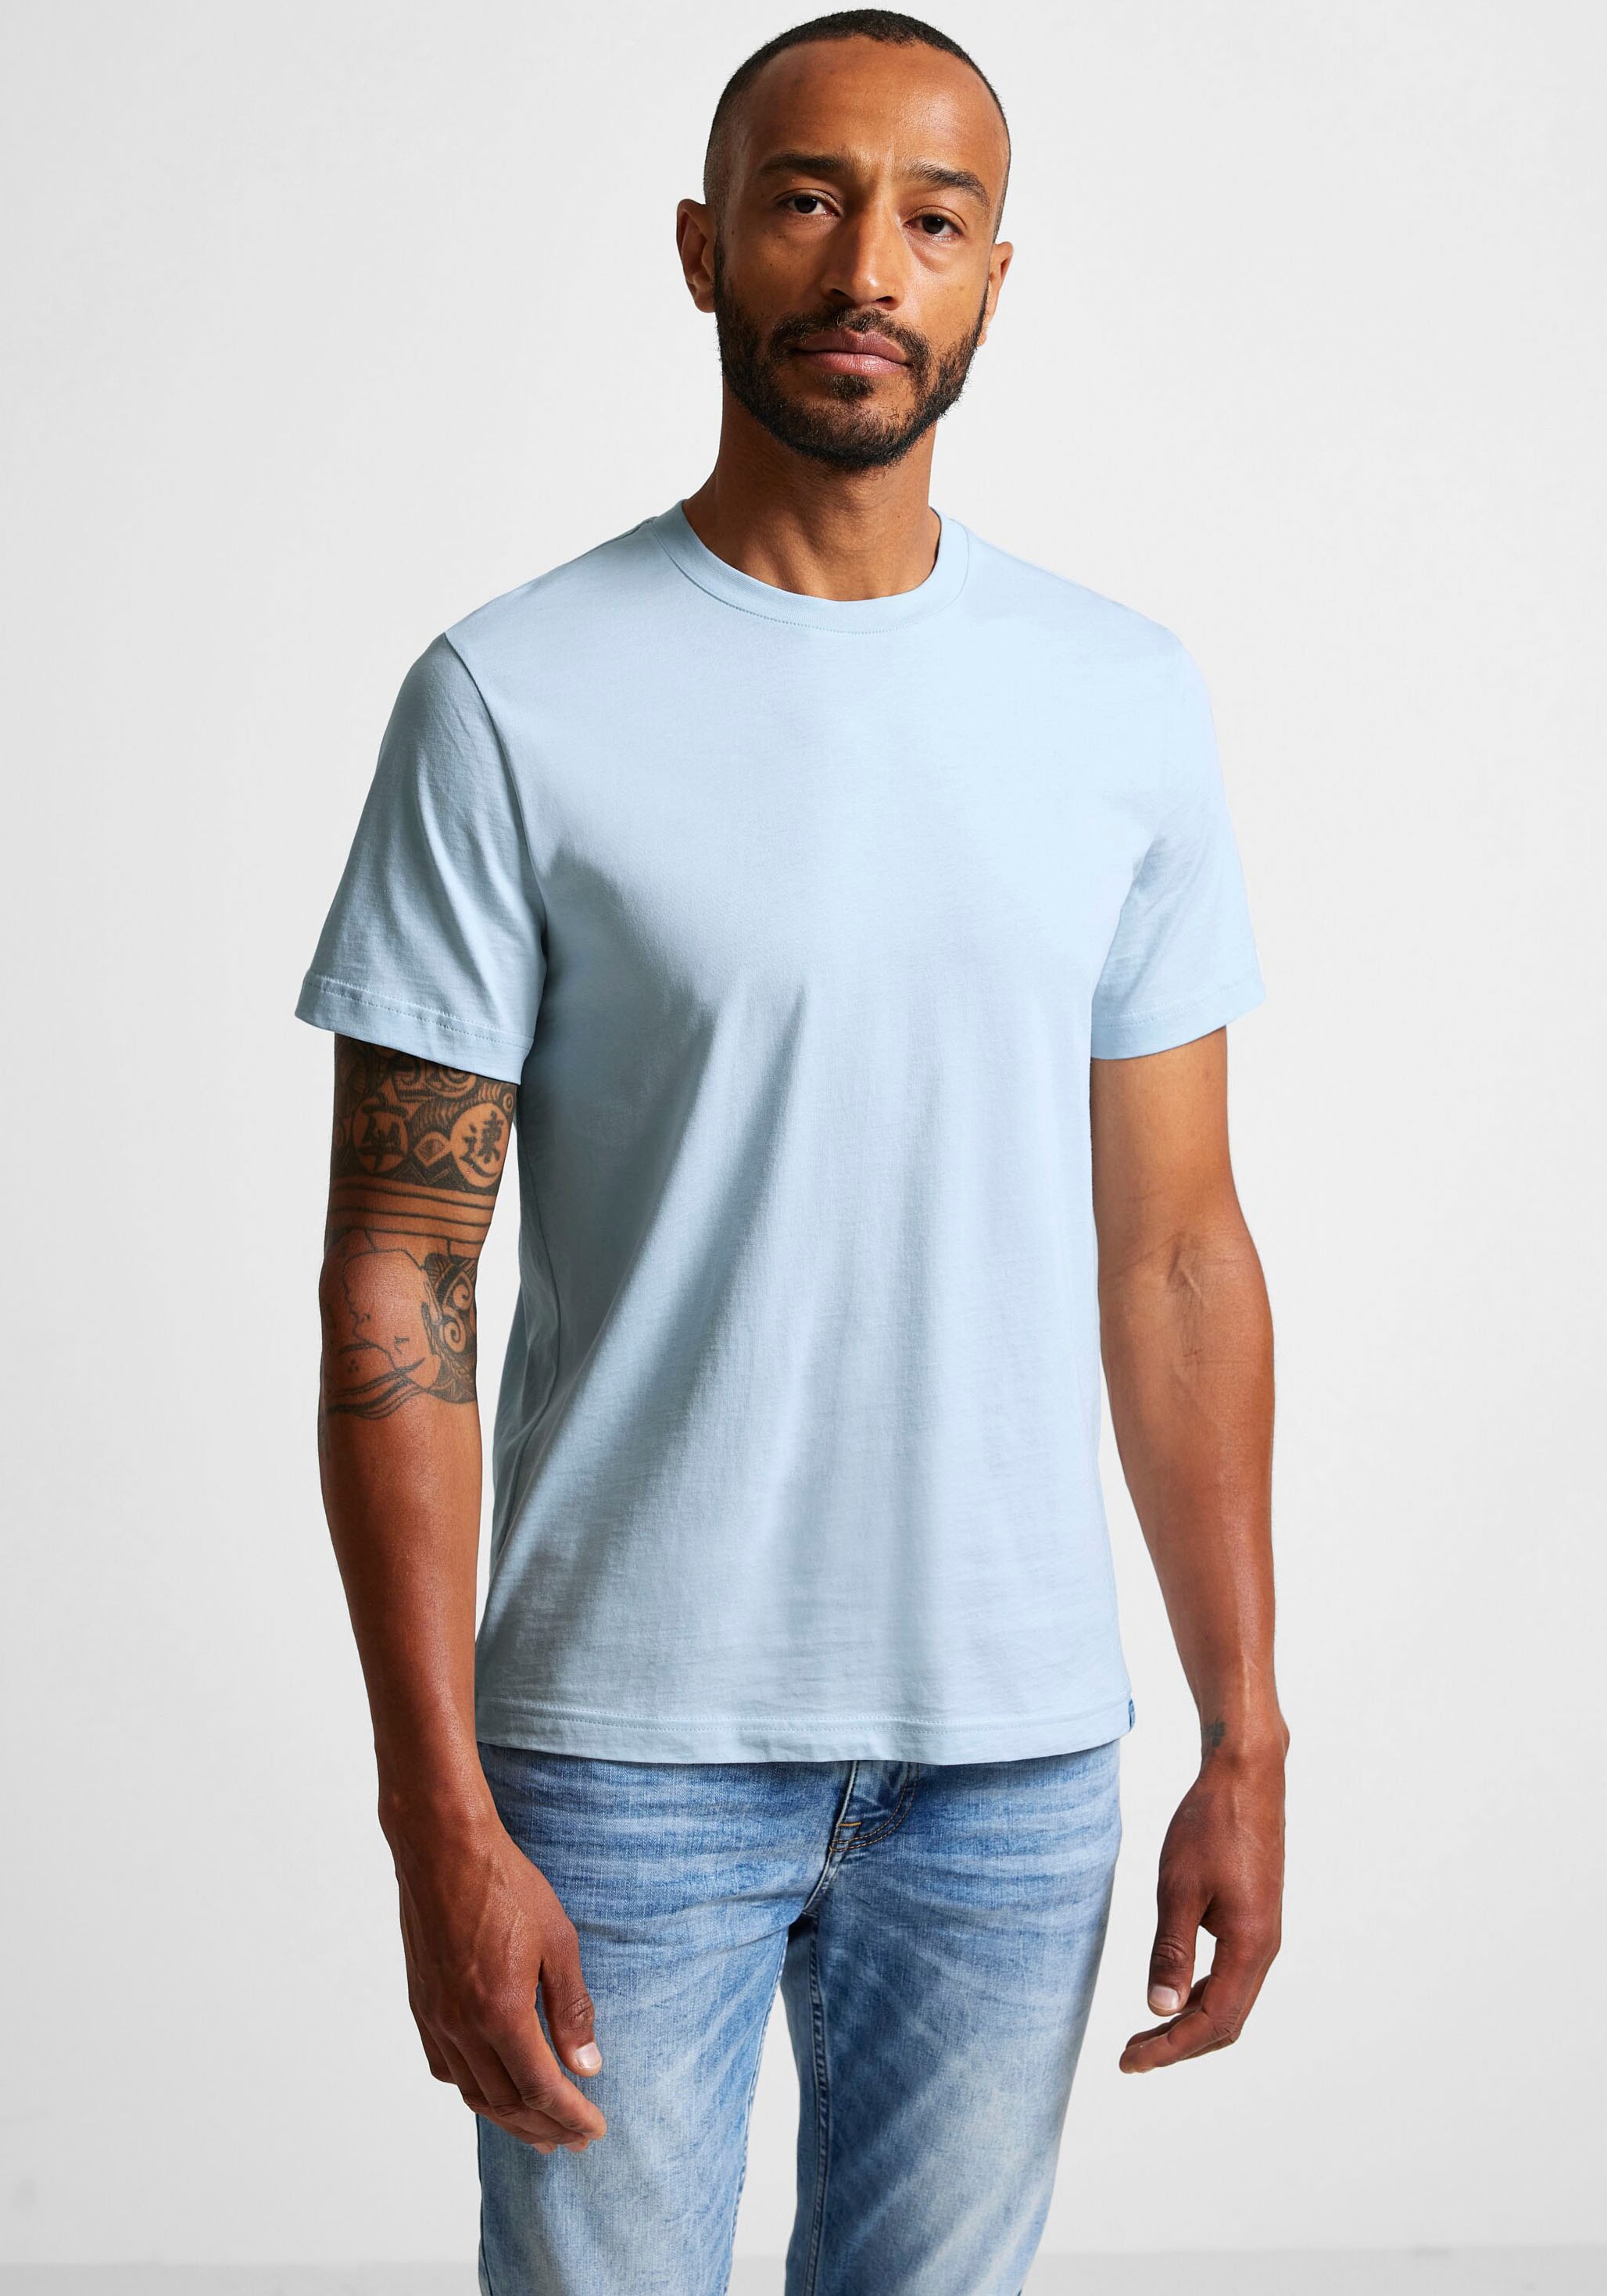 ONE ♕ T-Shirt, STREET Basic im Style MEN bei